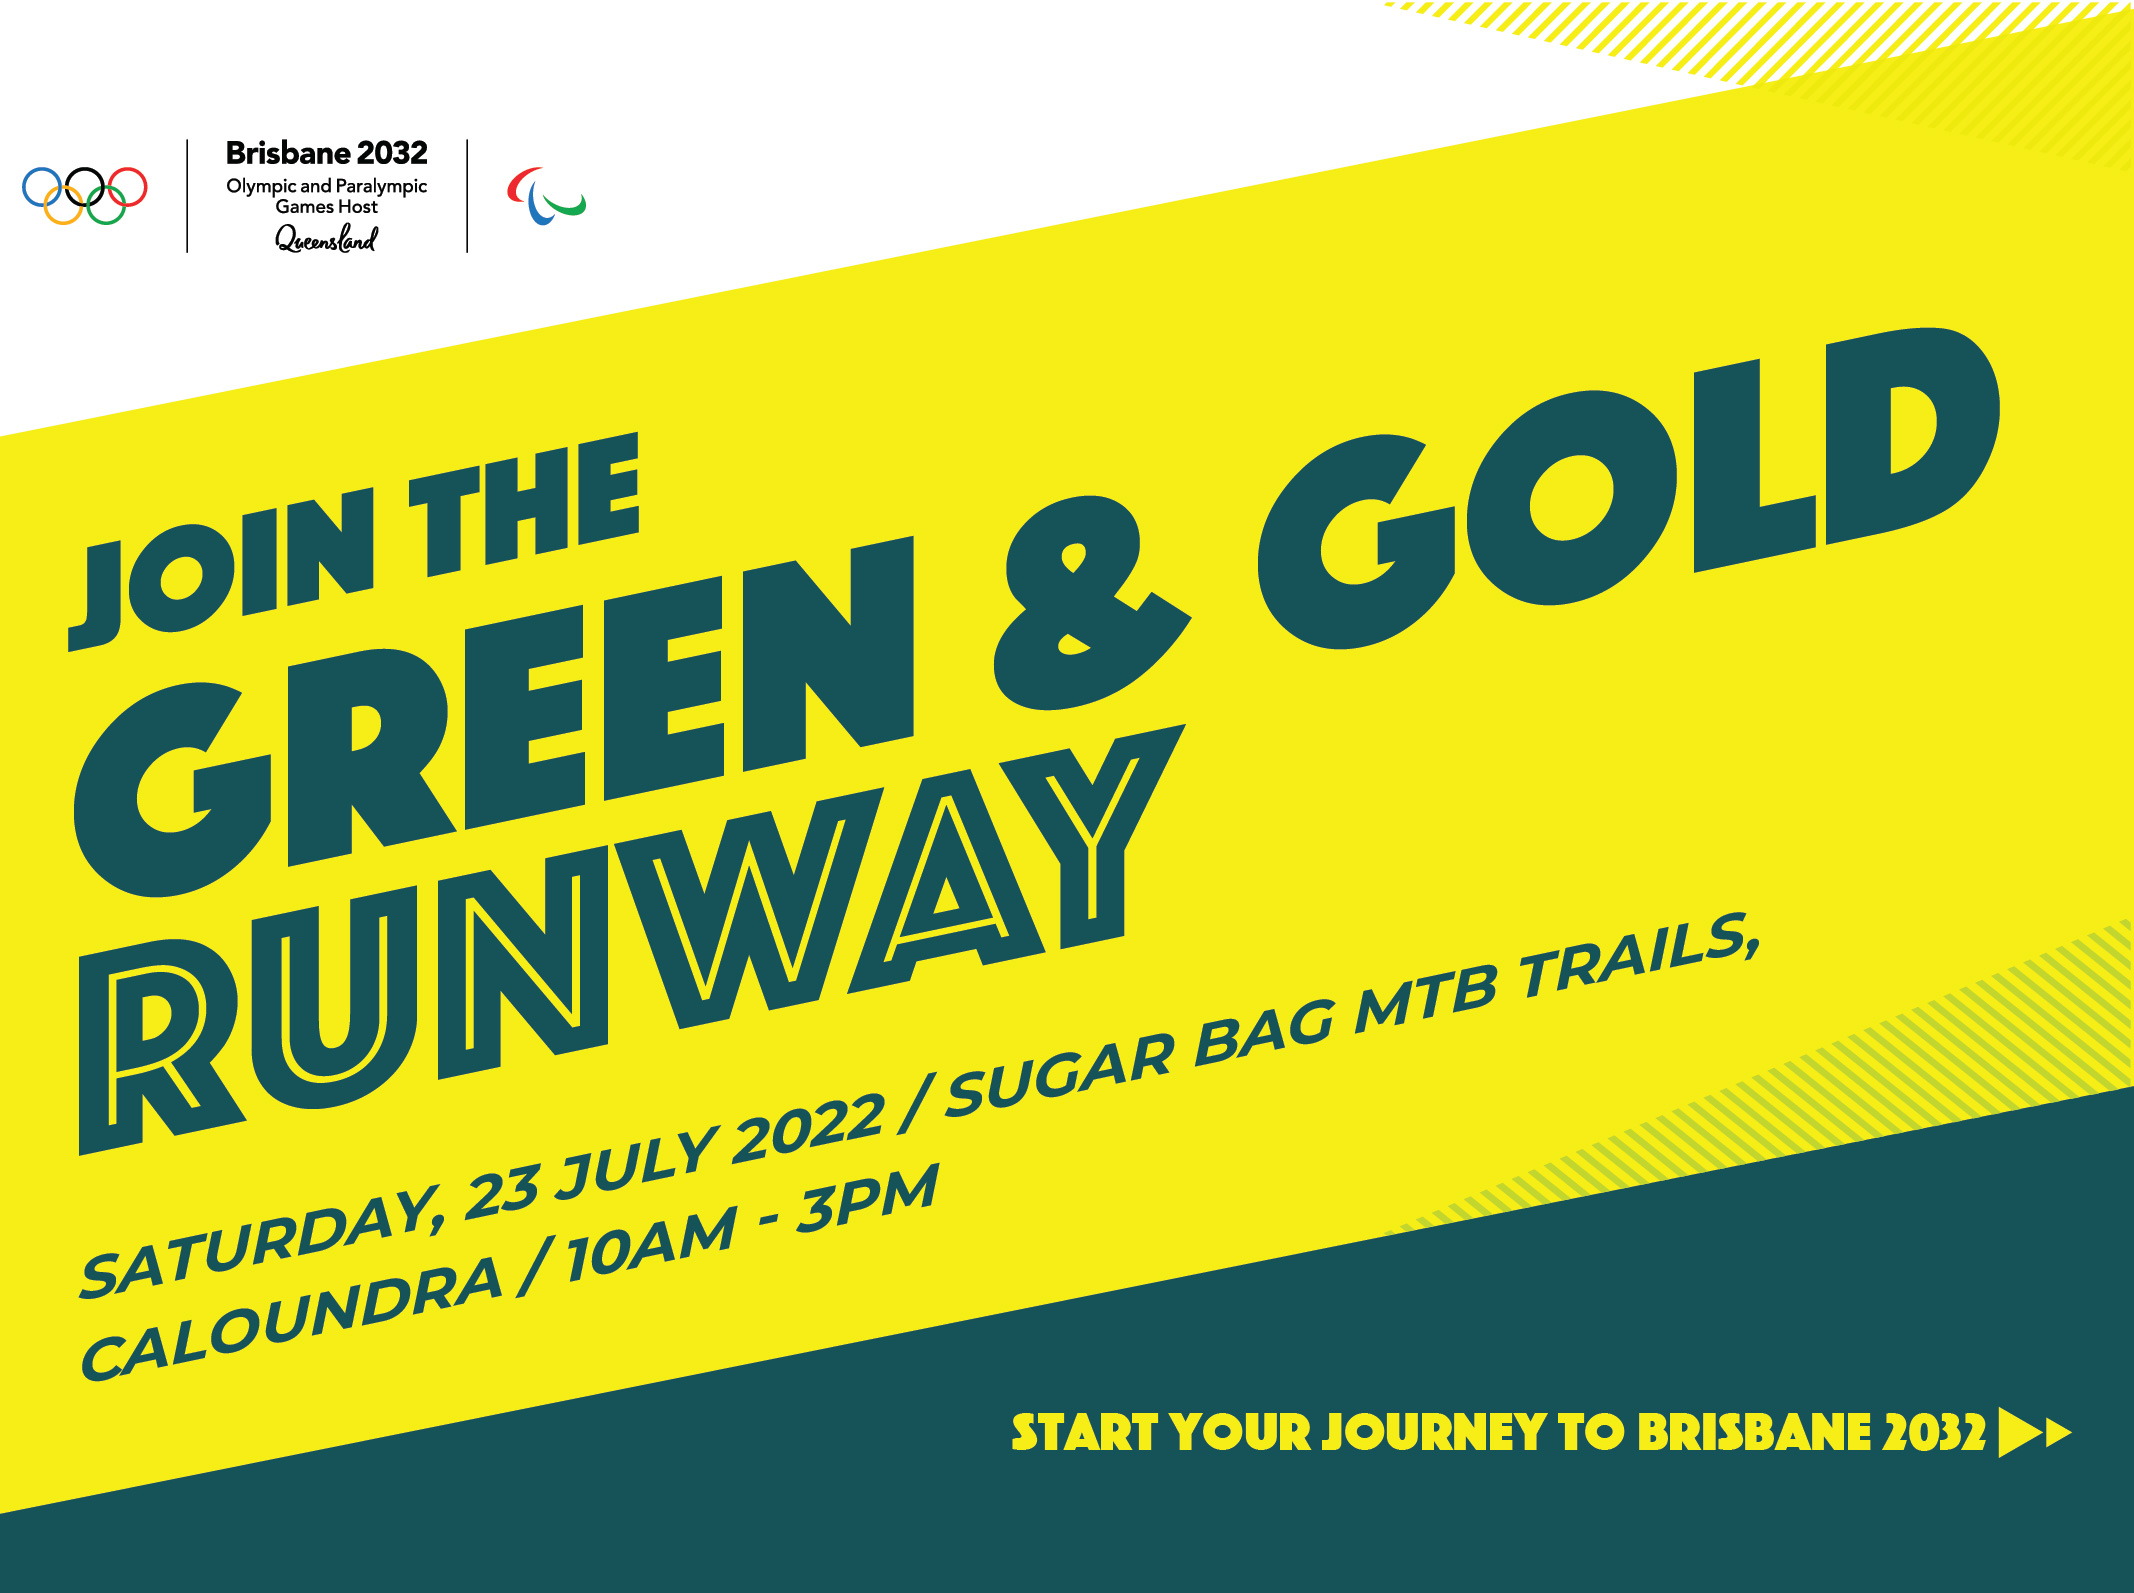 Go-for-gold and make tracks at Sunshine Coast event  